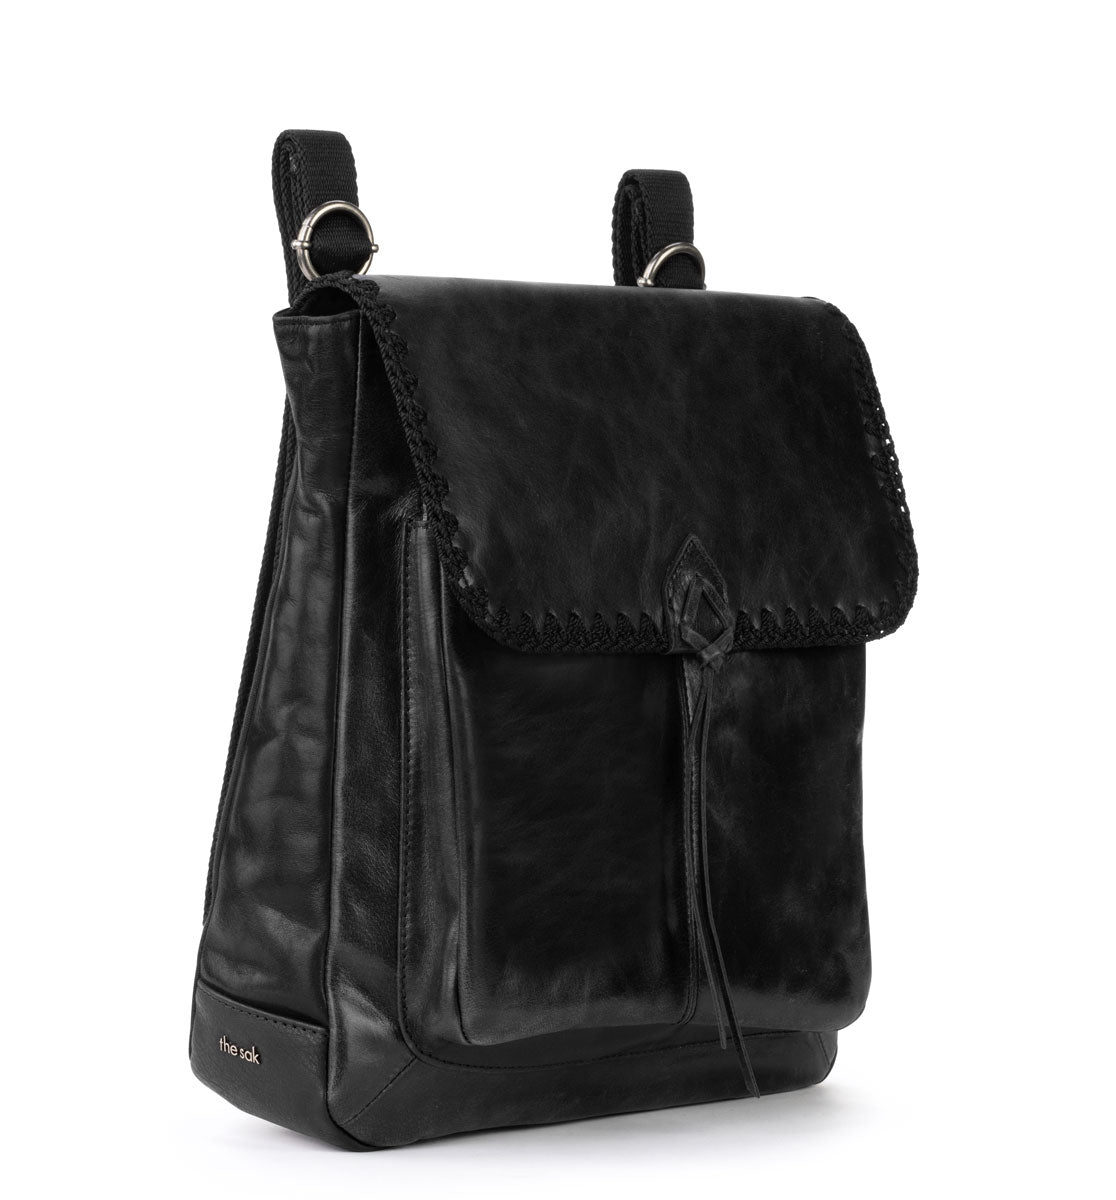 Amazon.com: The Sak Handbags